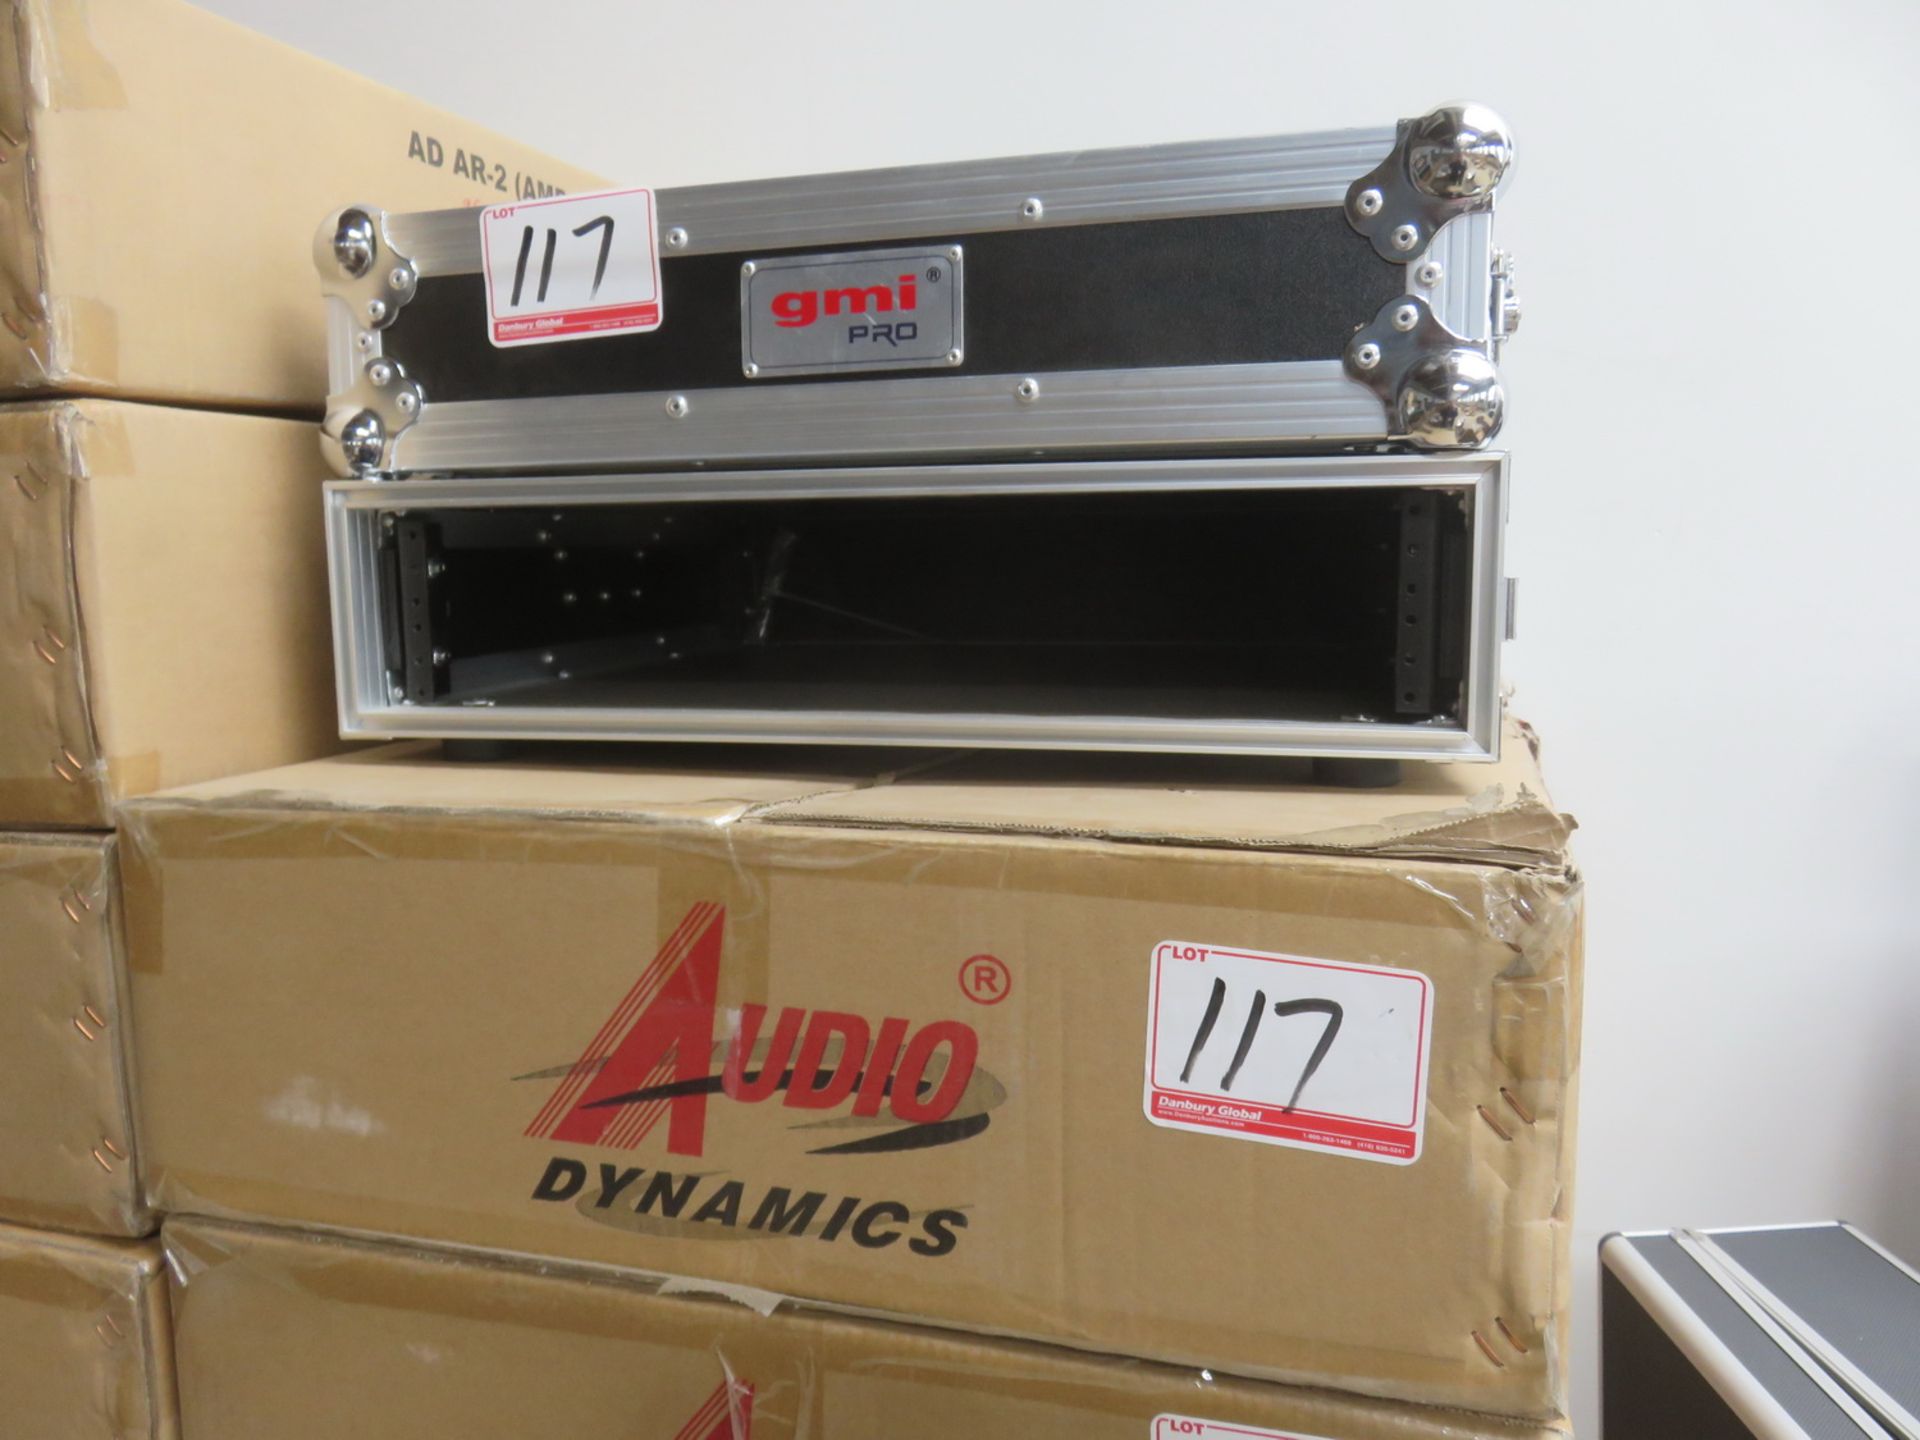 AUDIO DYNAMICS / GMI MOD AR.2 BLACK 5" X 20.25 X 26" AMP RACK (IN BOX)